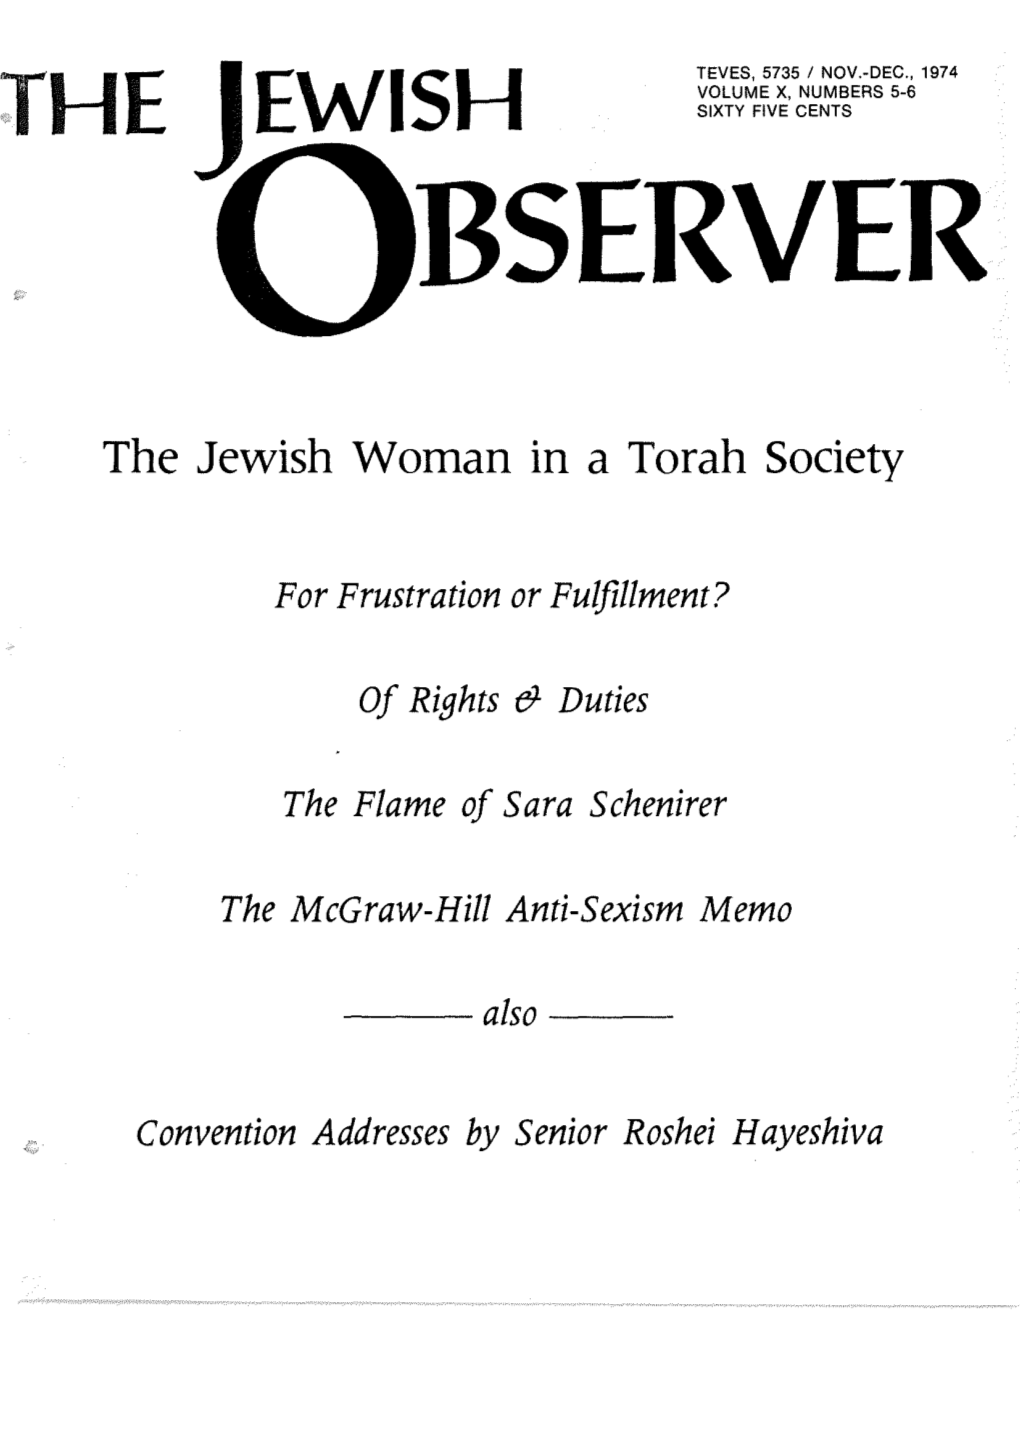 The Jewish Woman in a Torah Society